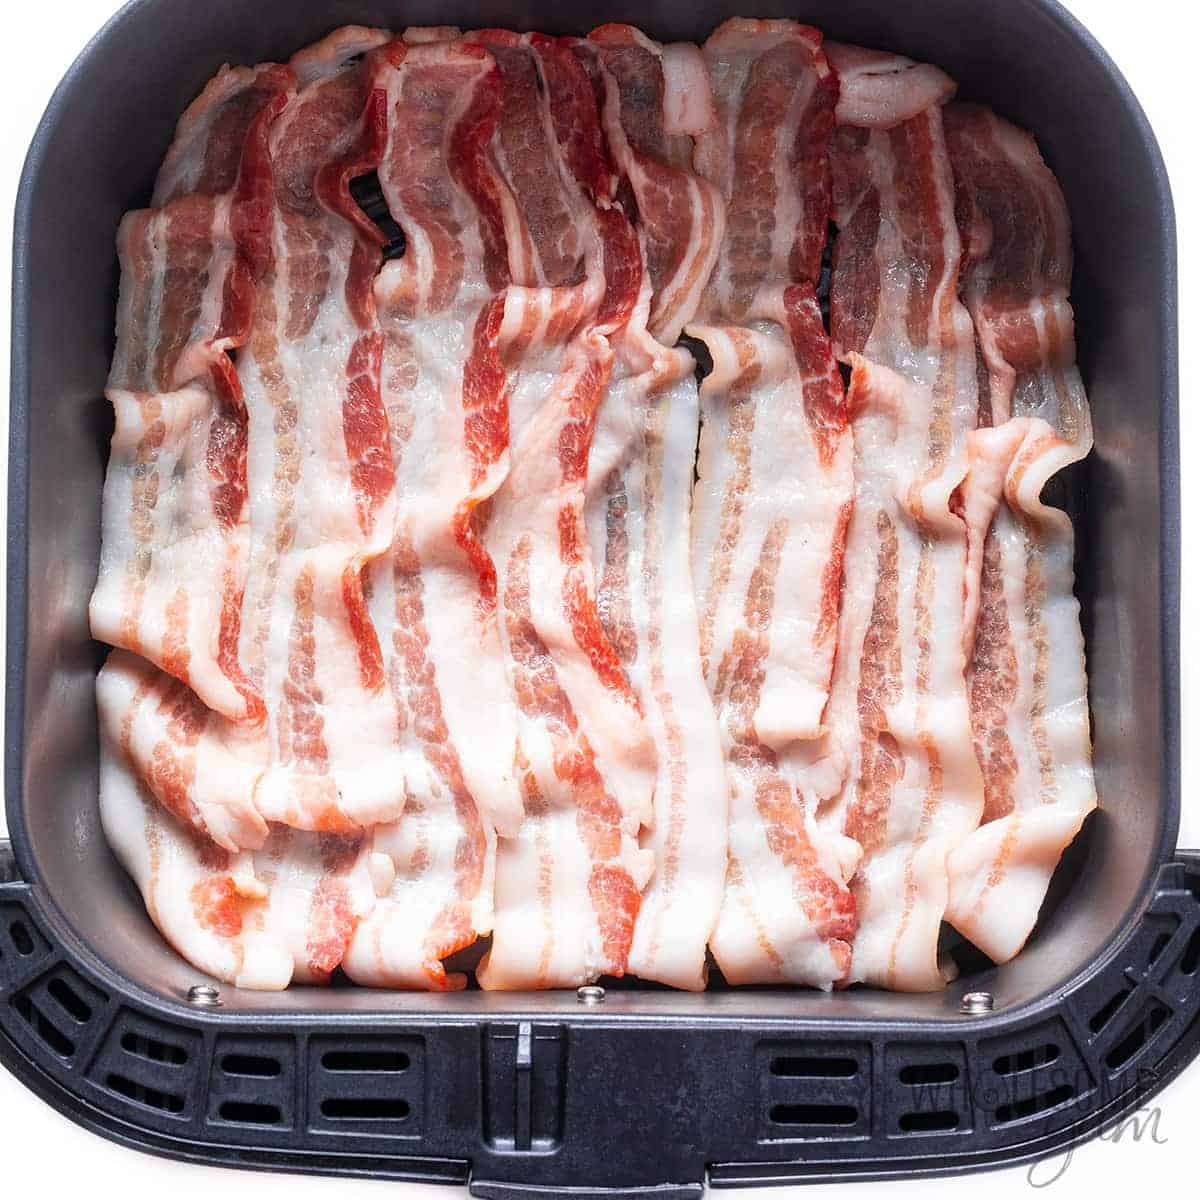 Raw bacon strips in air fryer basket.